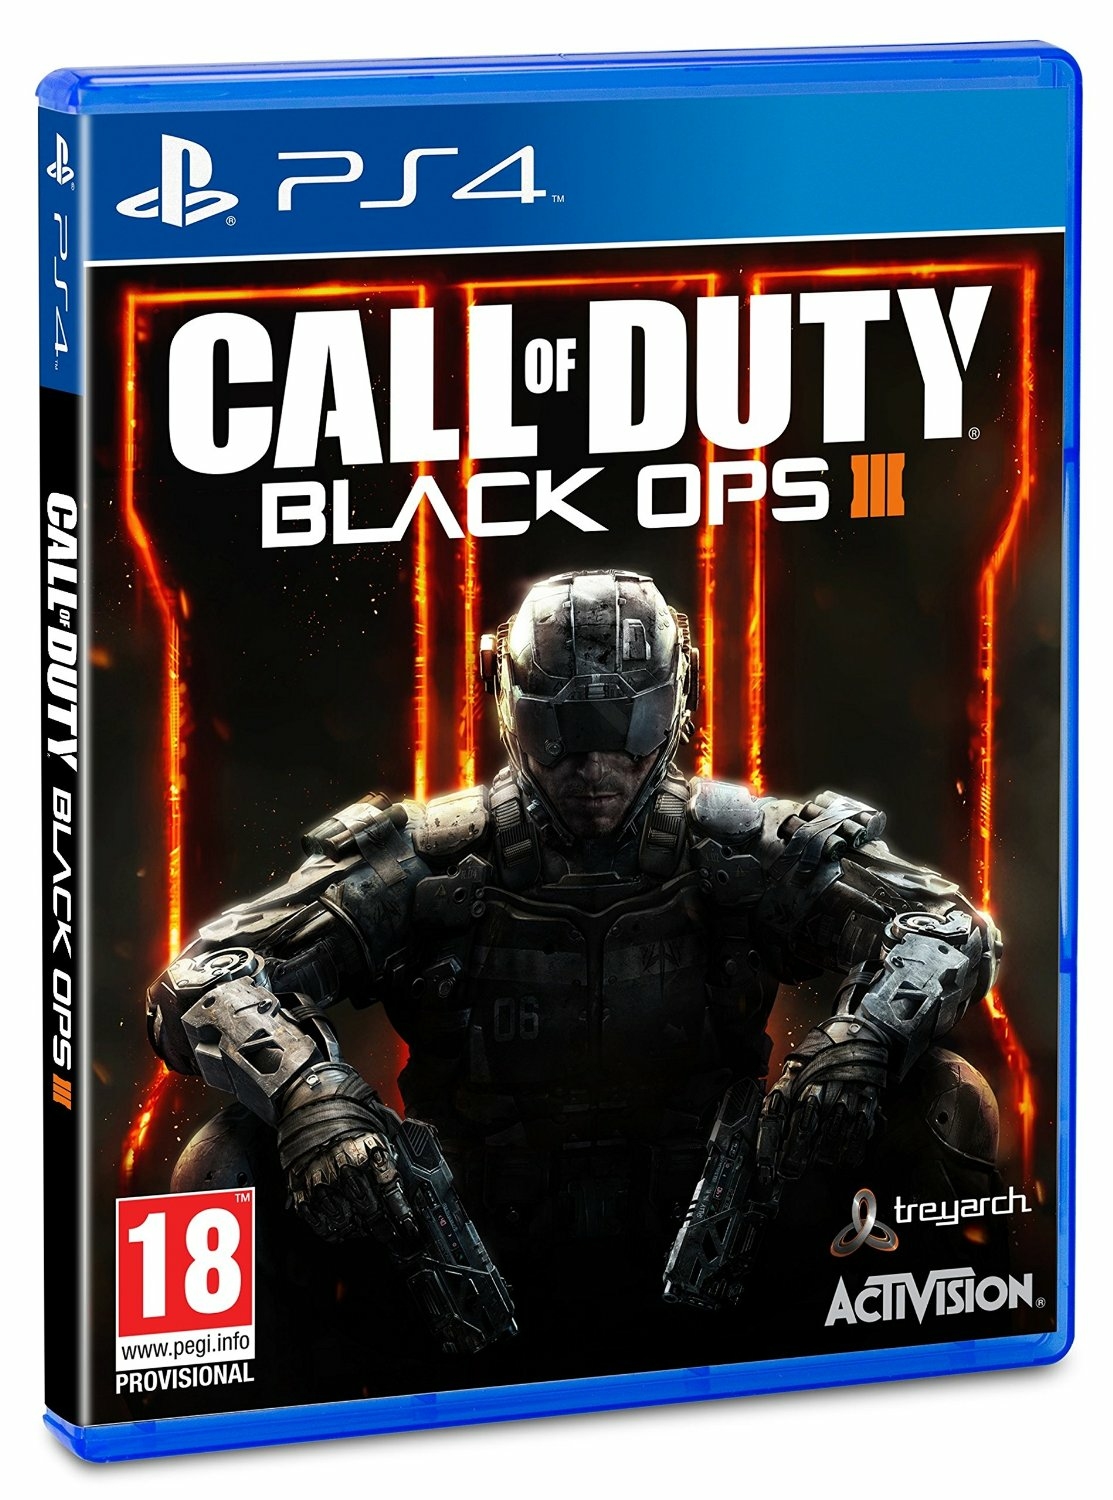 Калов дьюти на пс 5. Call of Duty Black ops III Sony ps4. Диск пс4 Блэк ОПС. Call of Duty Black ops 3 диск. Cod Black ops 3 ПС 4.